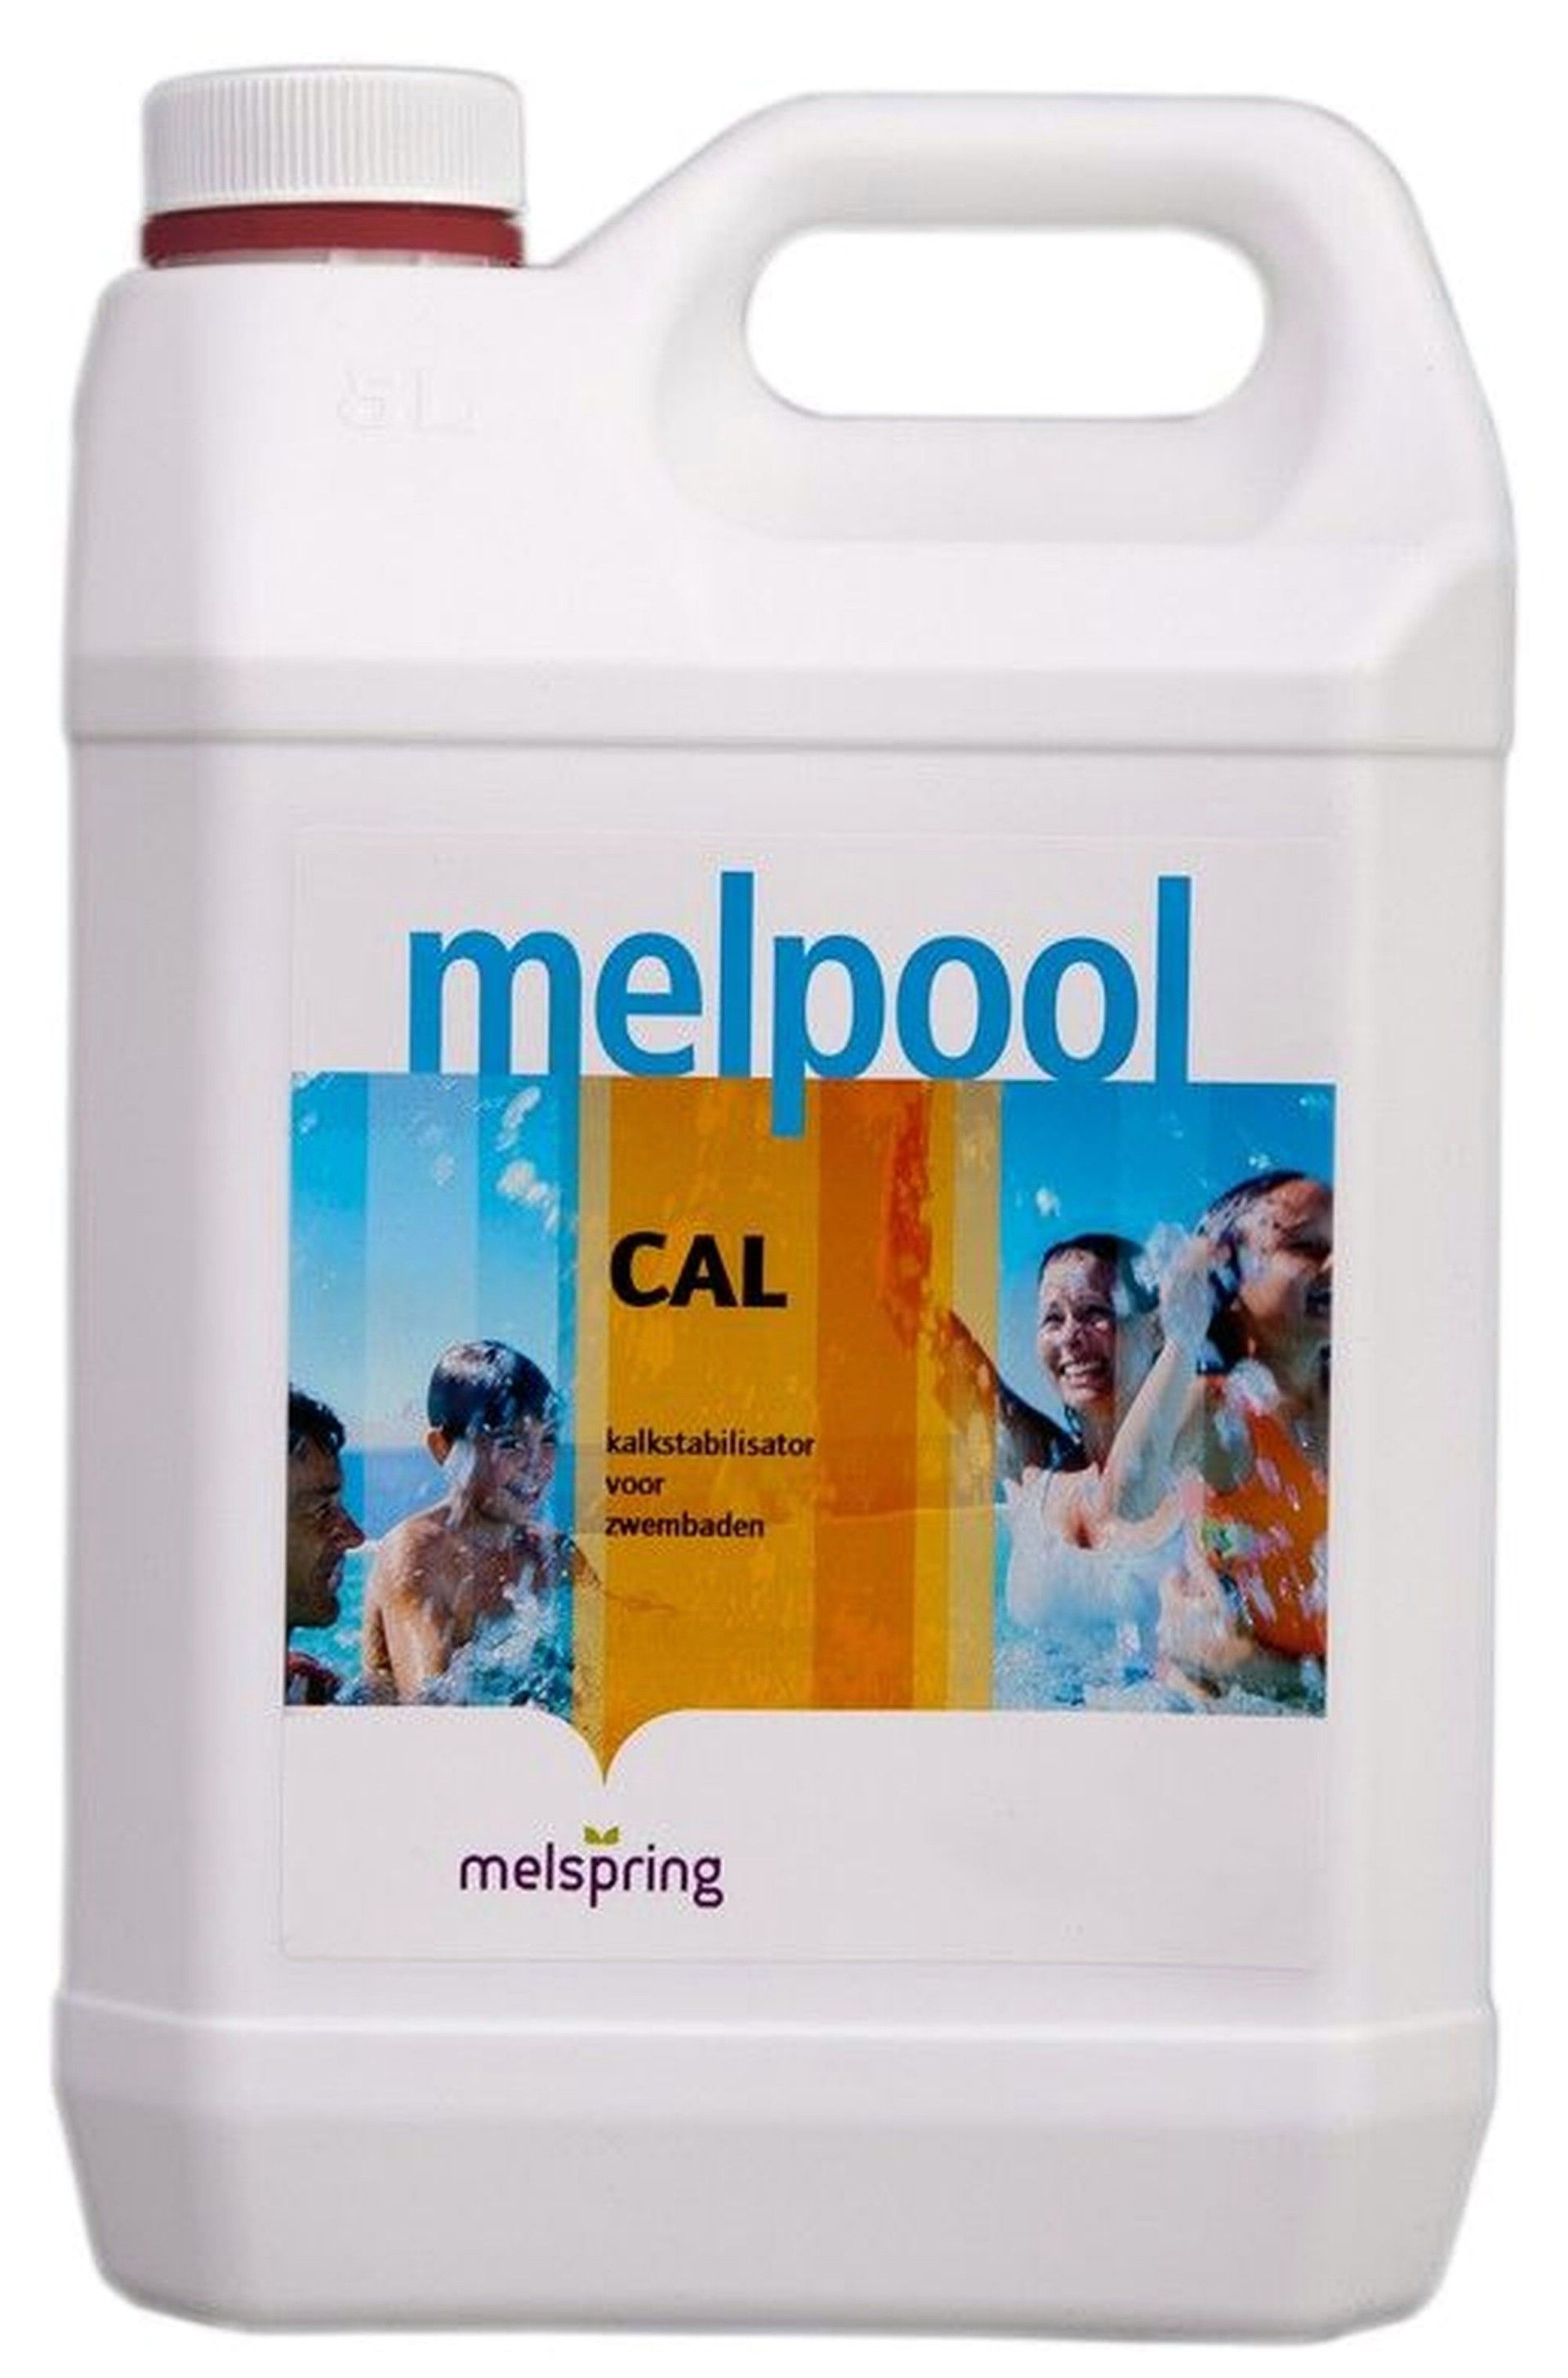 Foto van Melpool CAL anti kalkaanslag 5 liter (anti kalk)